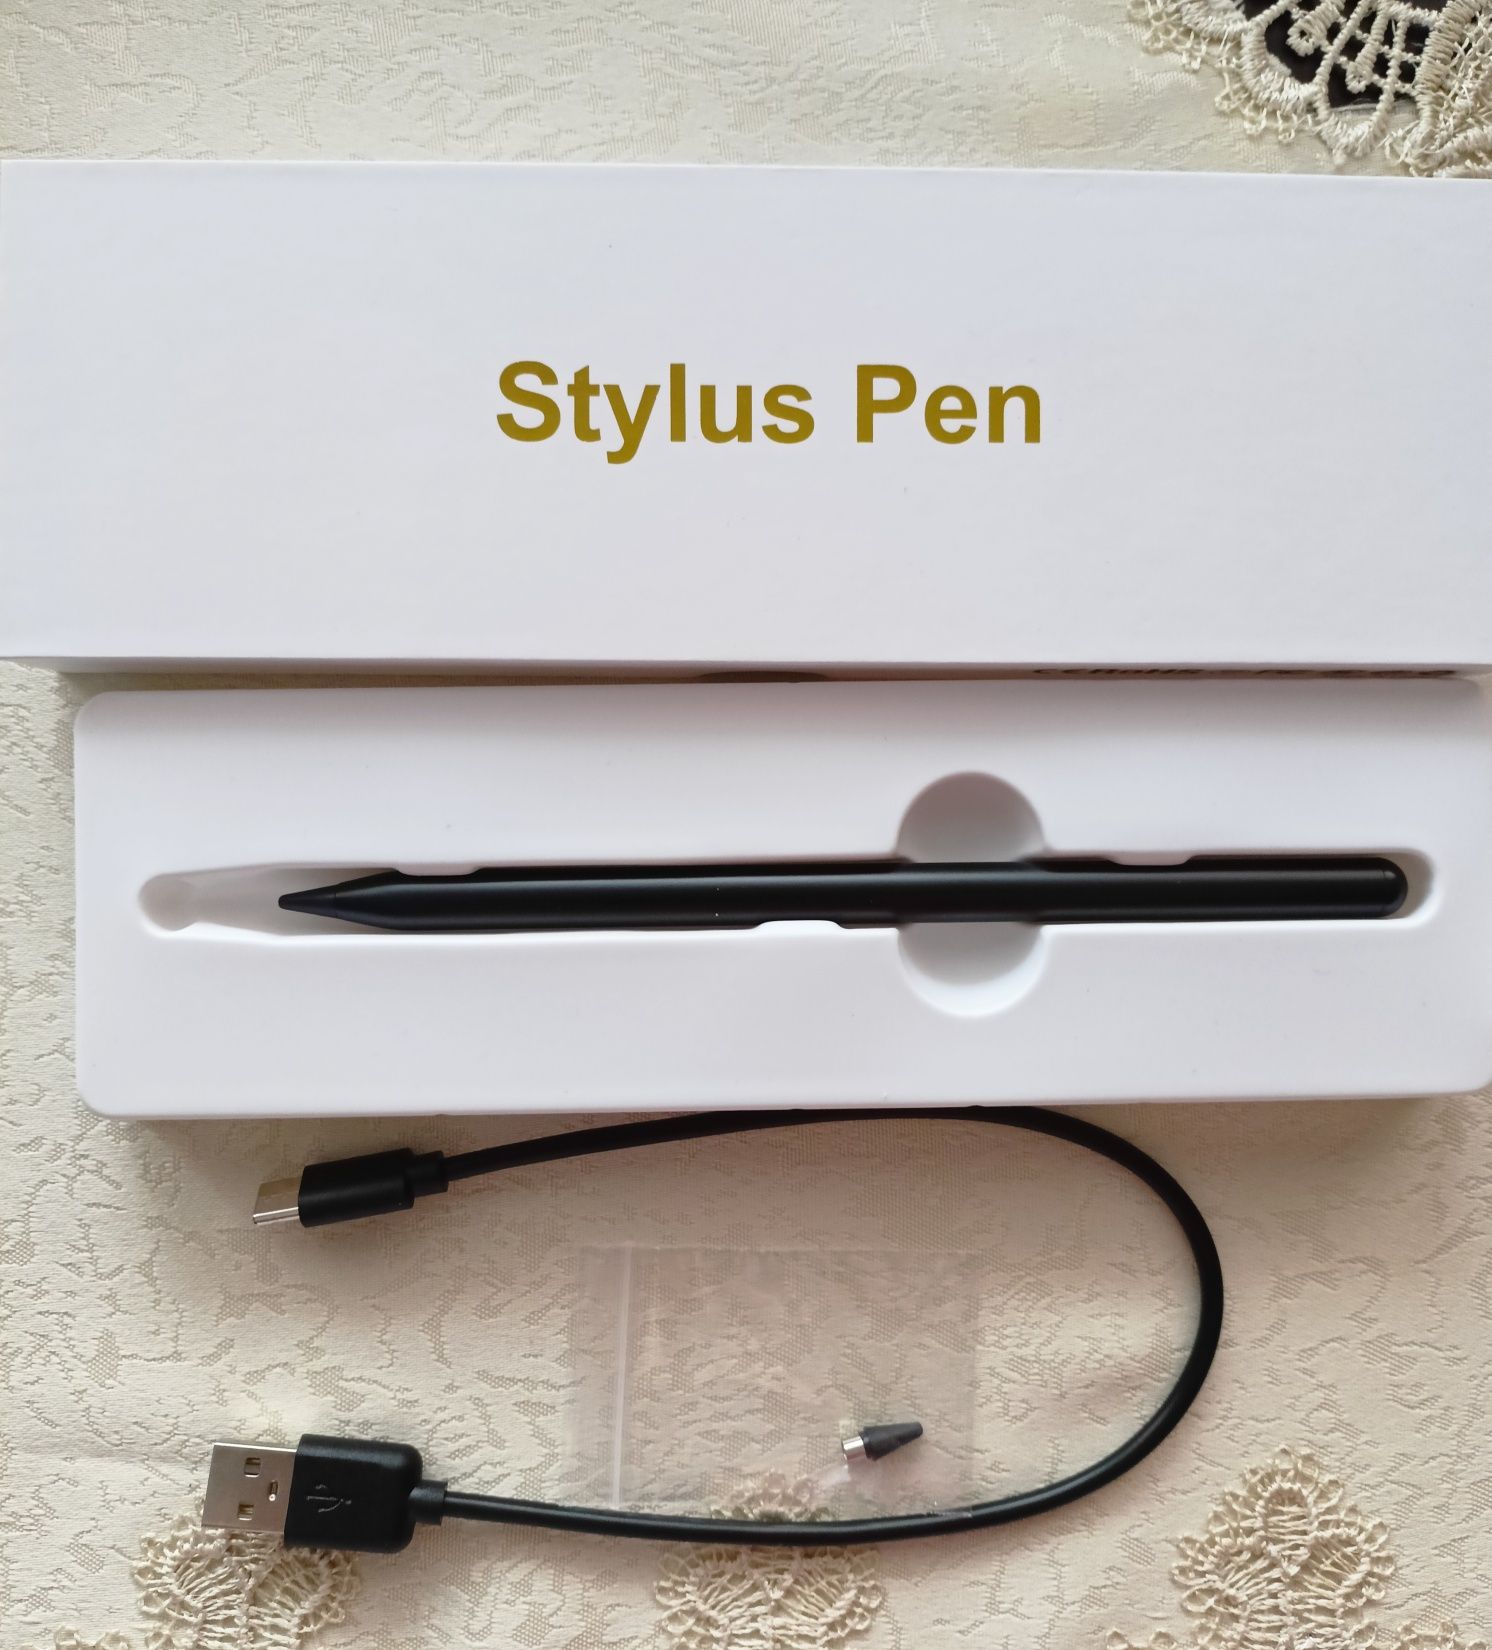 Nowy rysik Stylus Pen do ekranów.